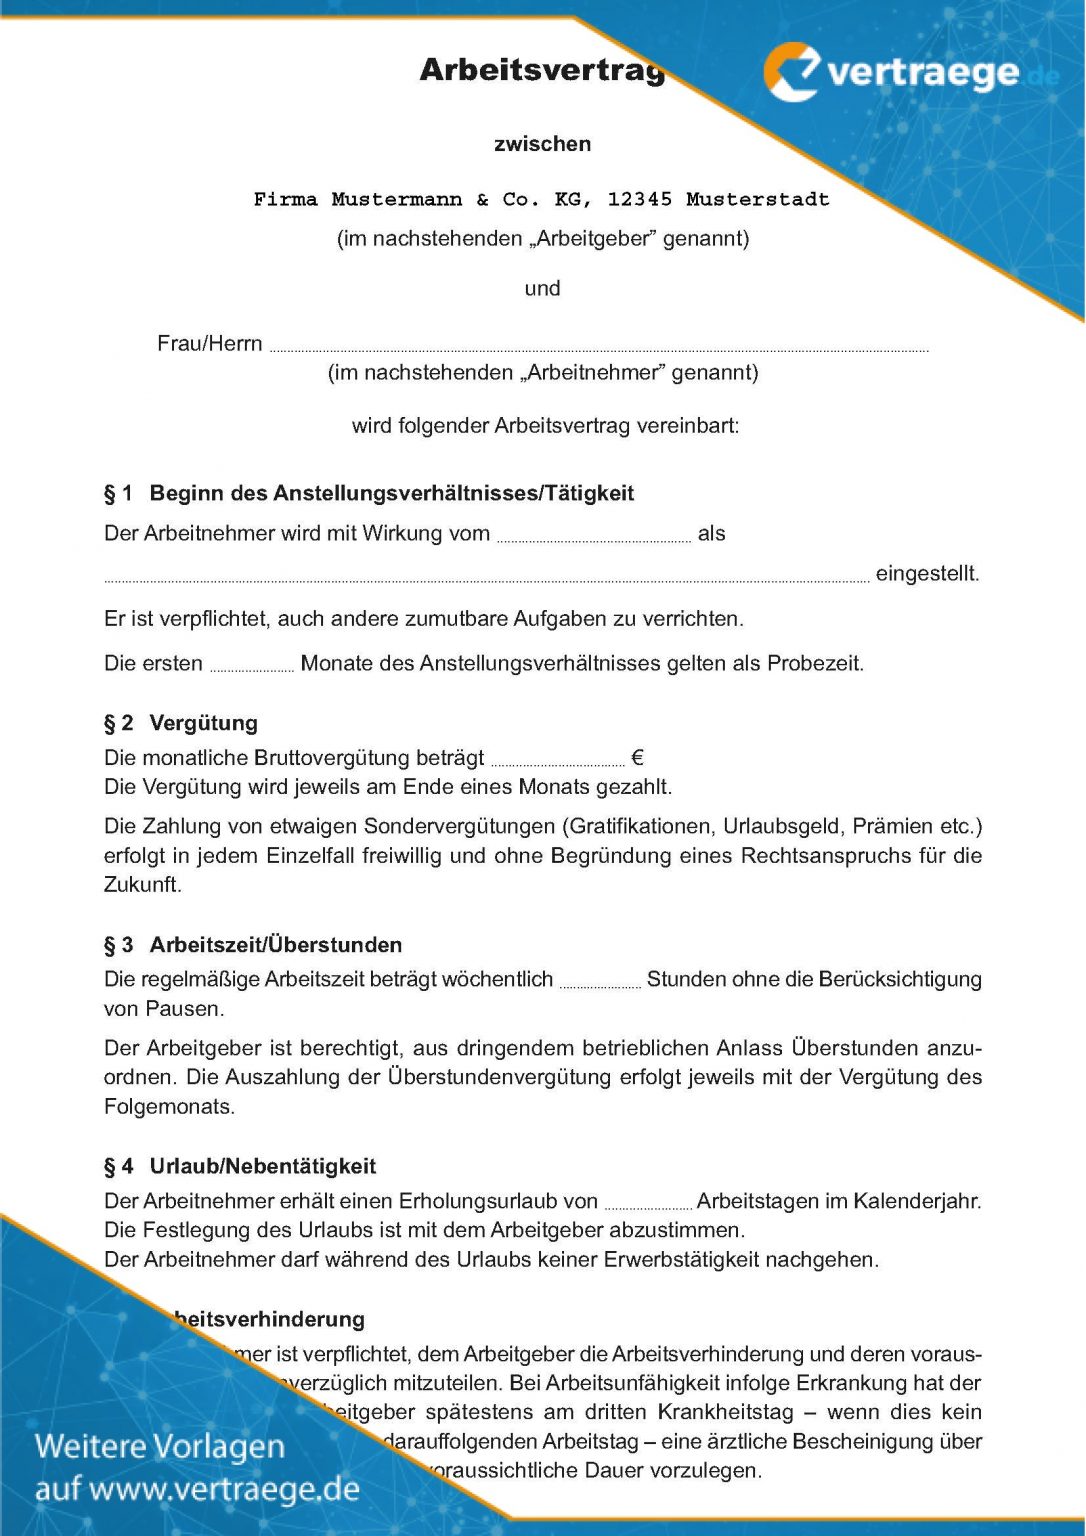 Wichtige Bestandteile eines Arbeitsvertrages Vertraege.de